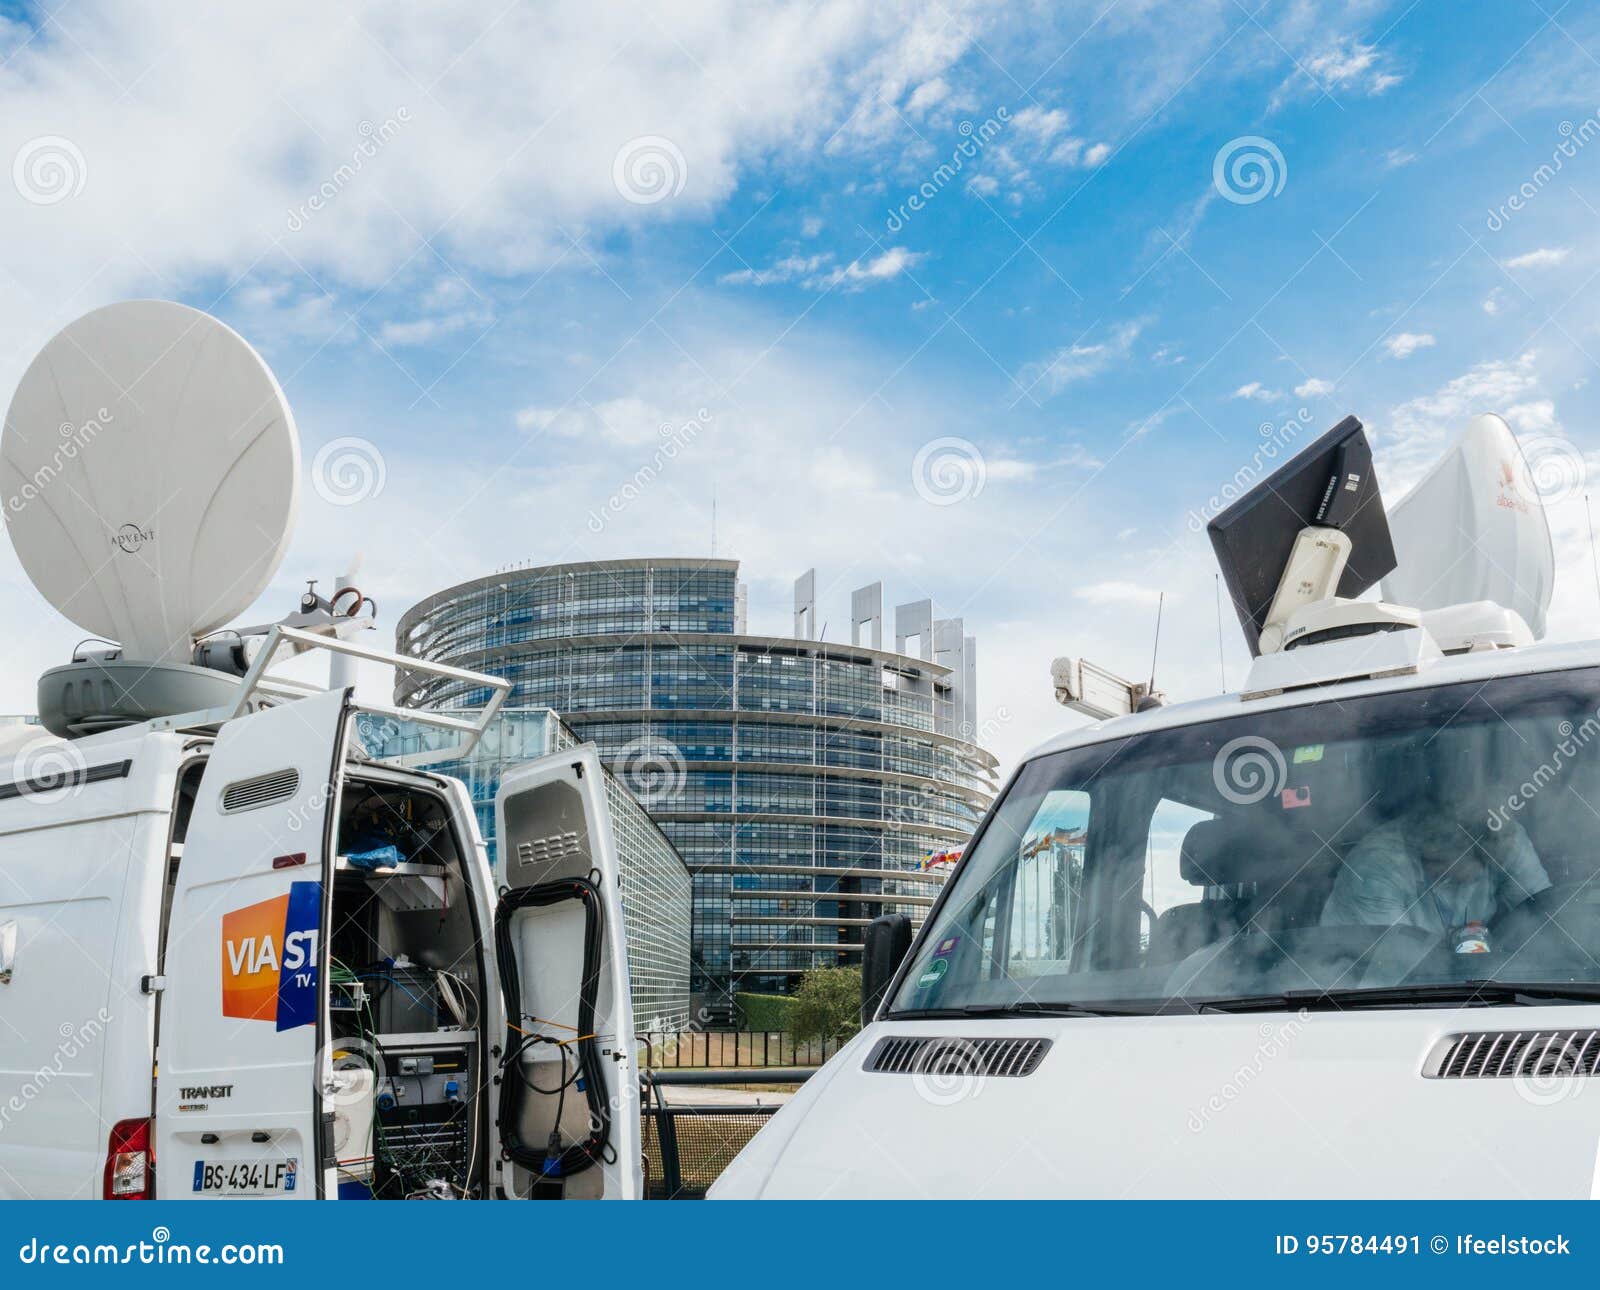 Media TV Truck Van Parked in Front of Parliament European Building